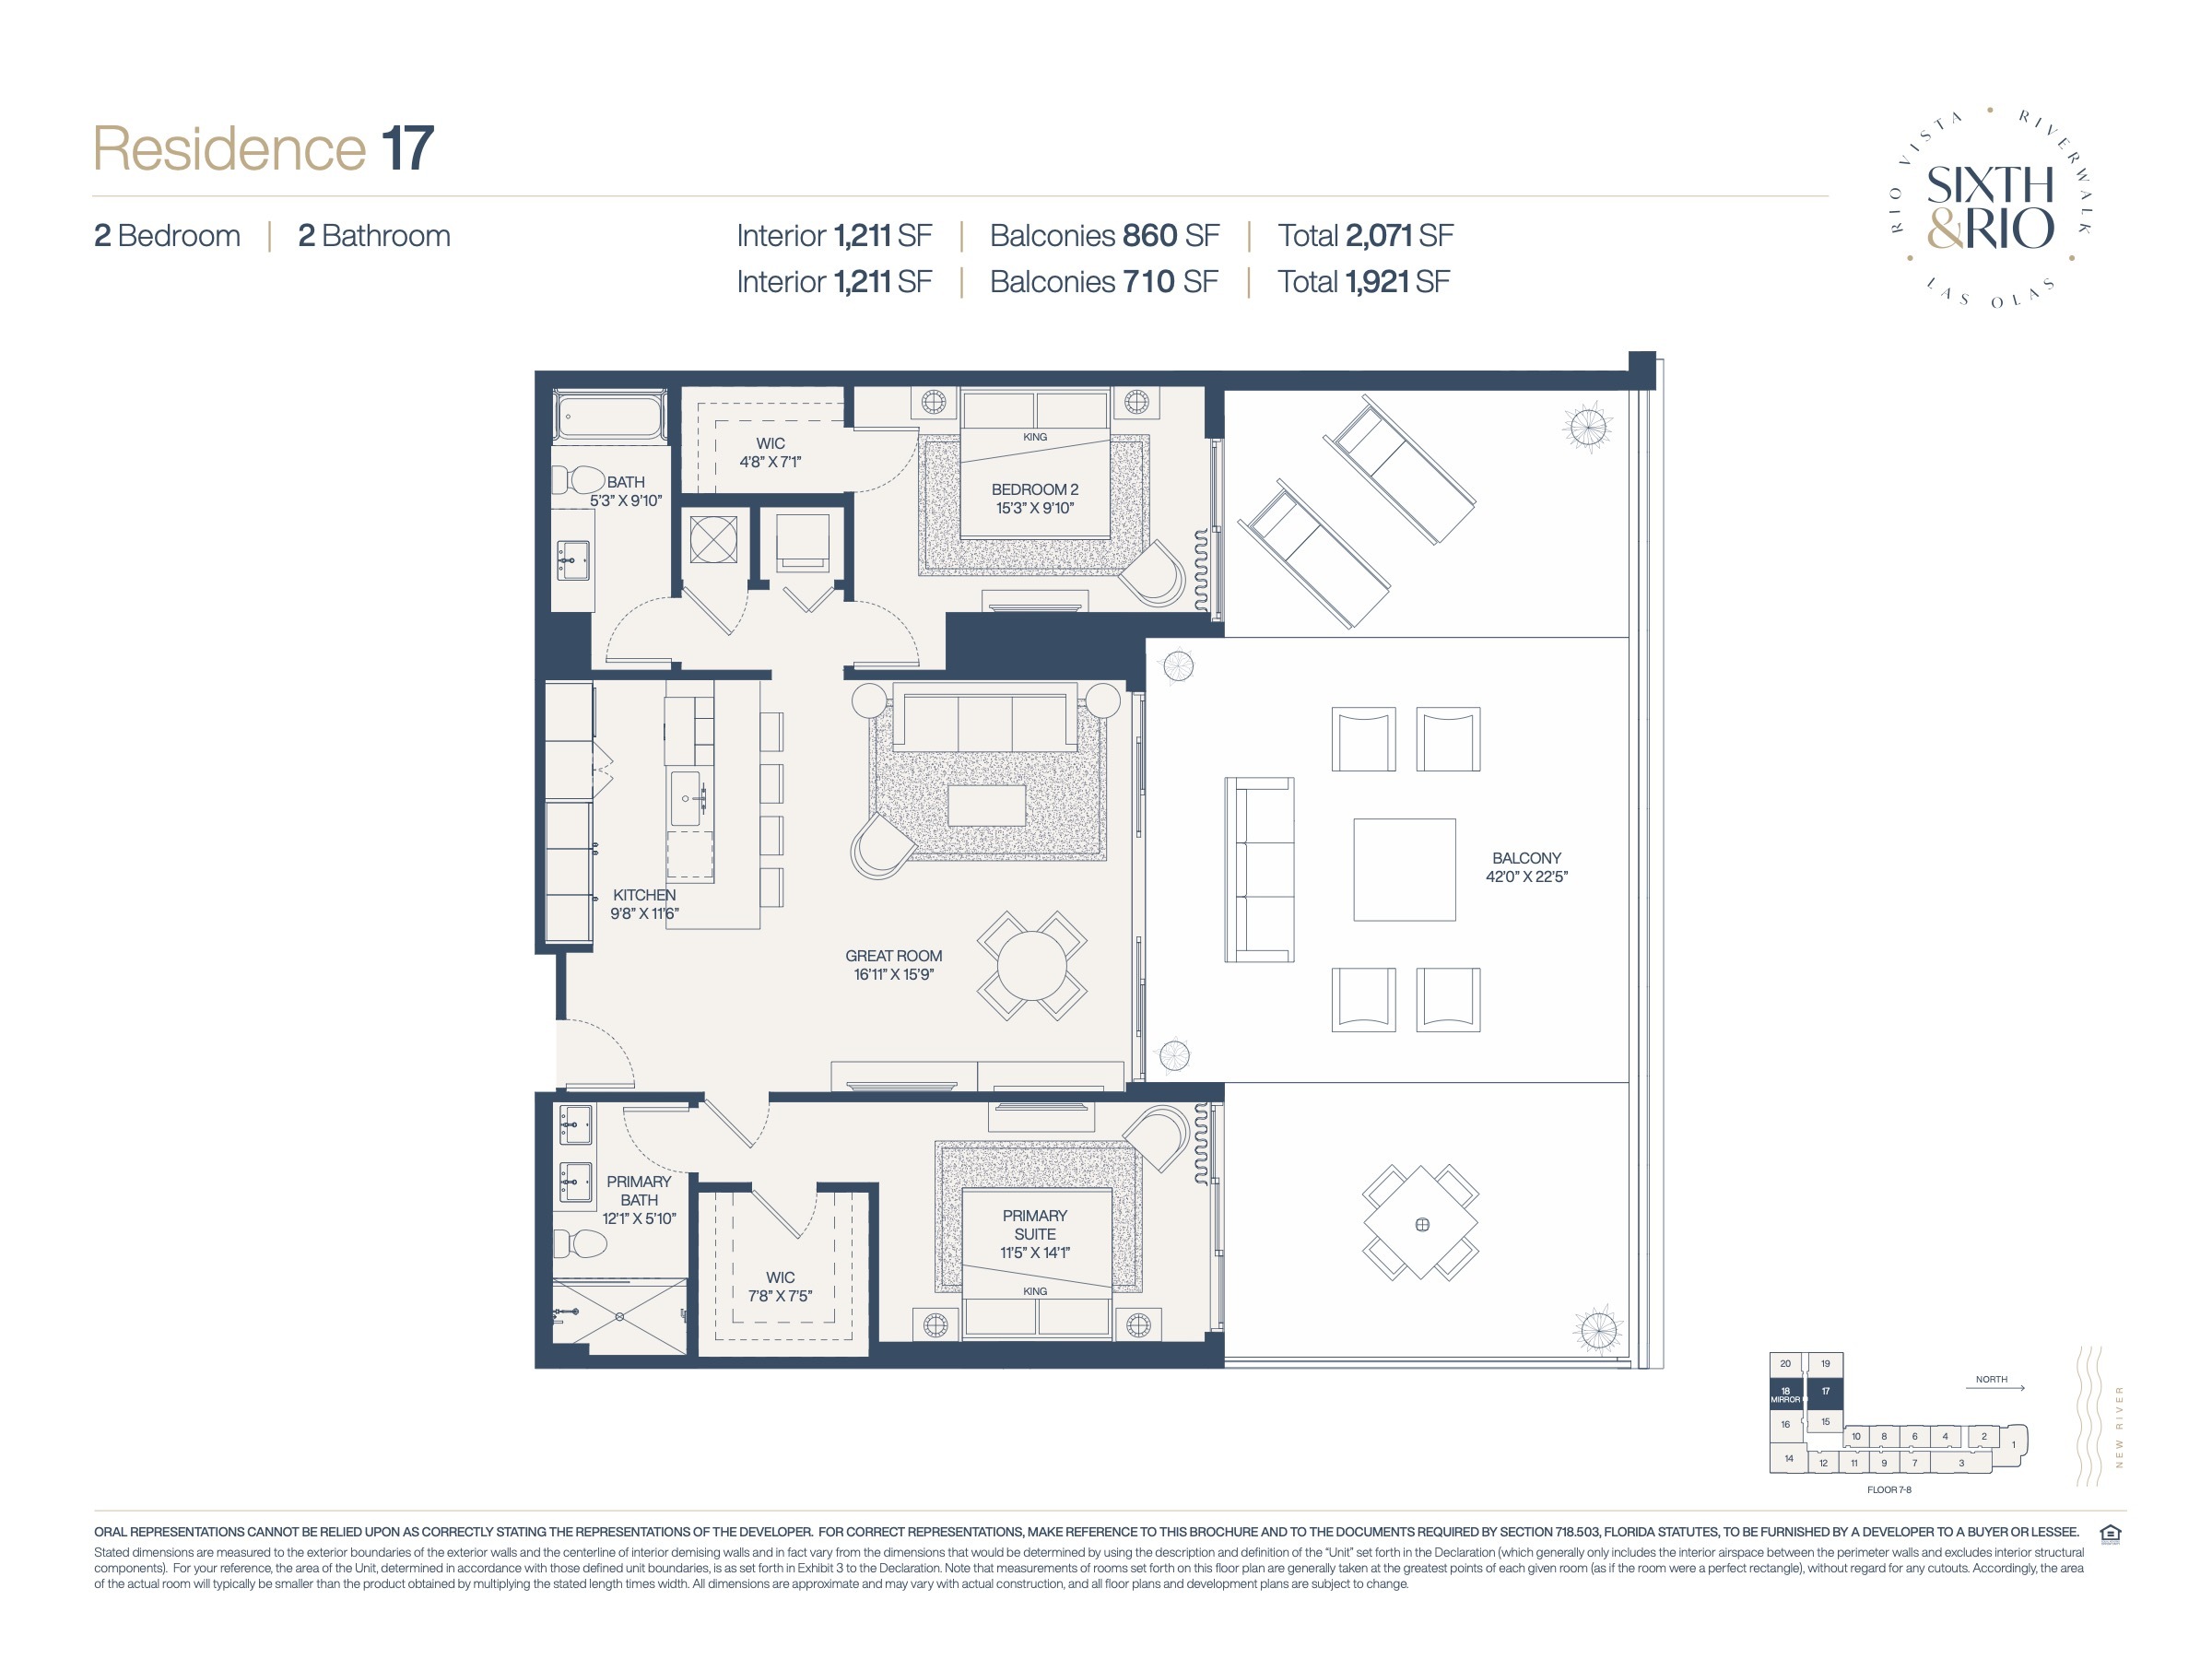 Floor Plan for Sixth & Rio Fort Lauderdale Floorplans, Residence 17